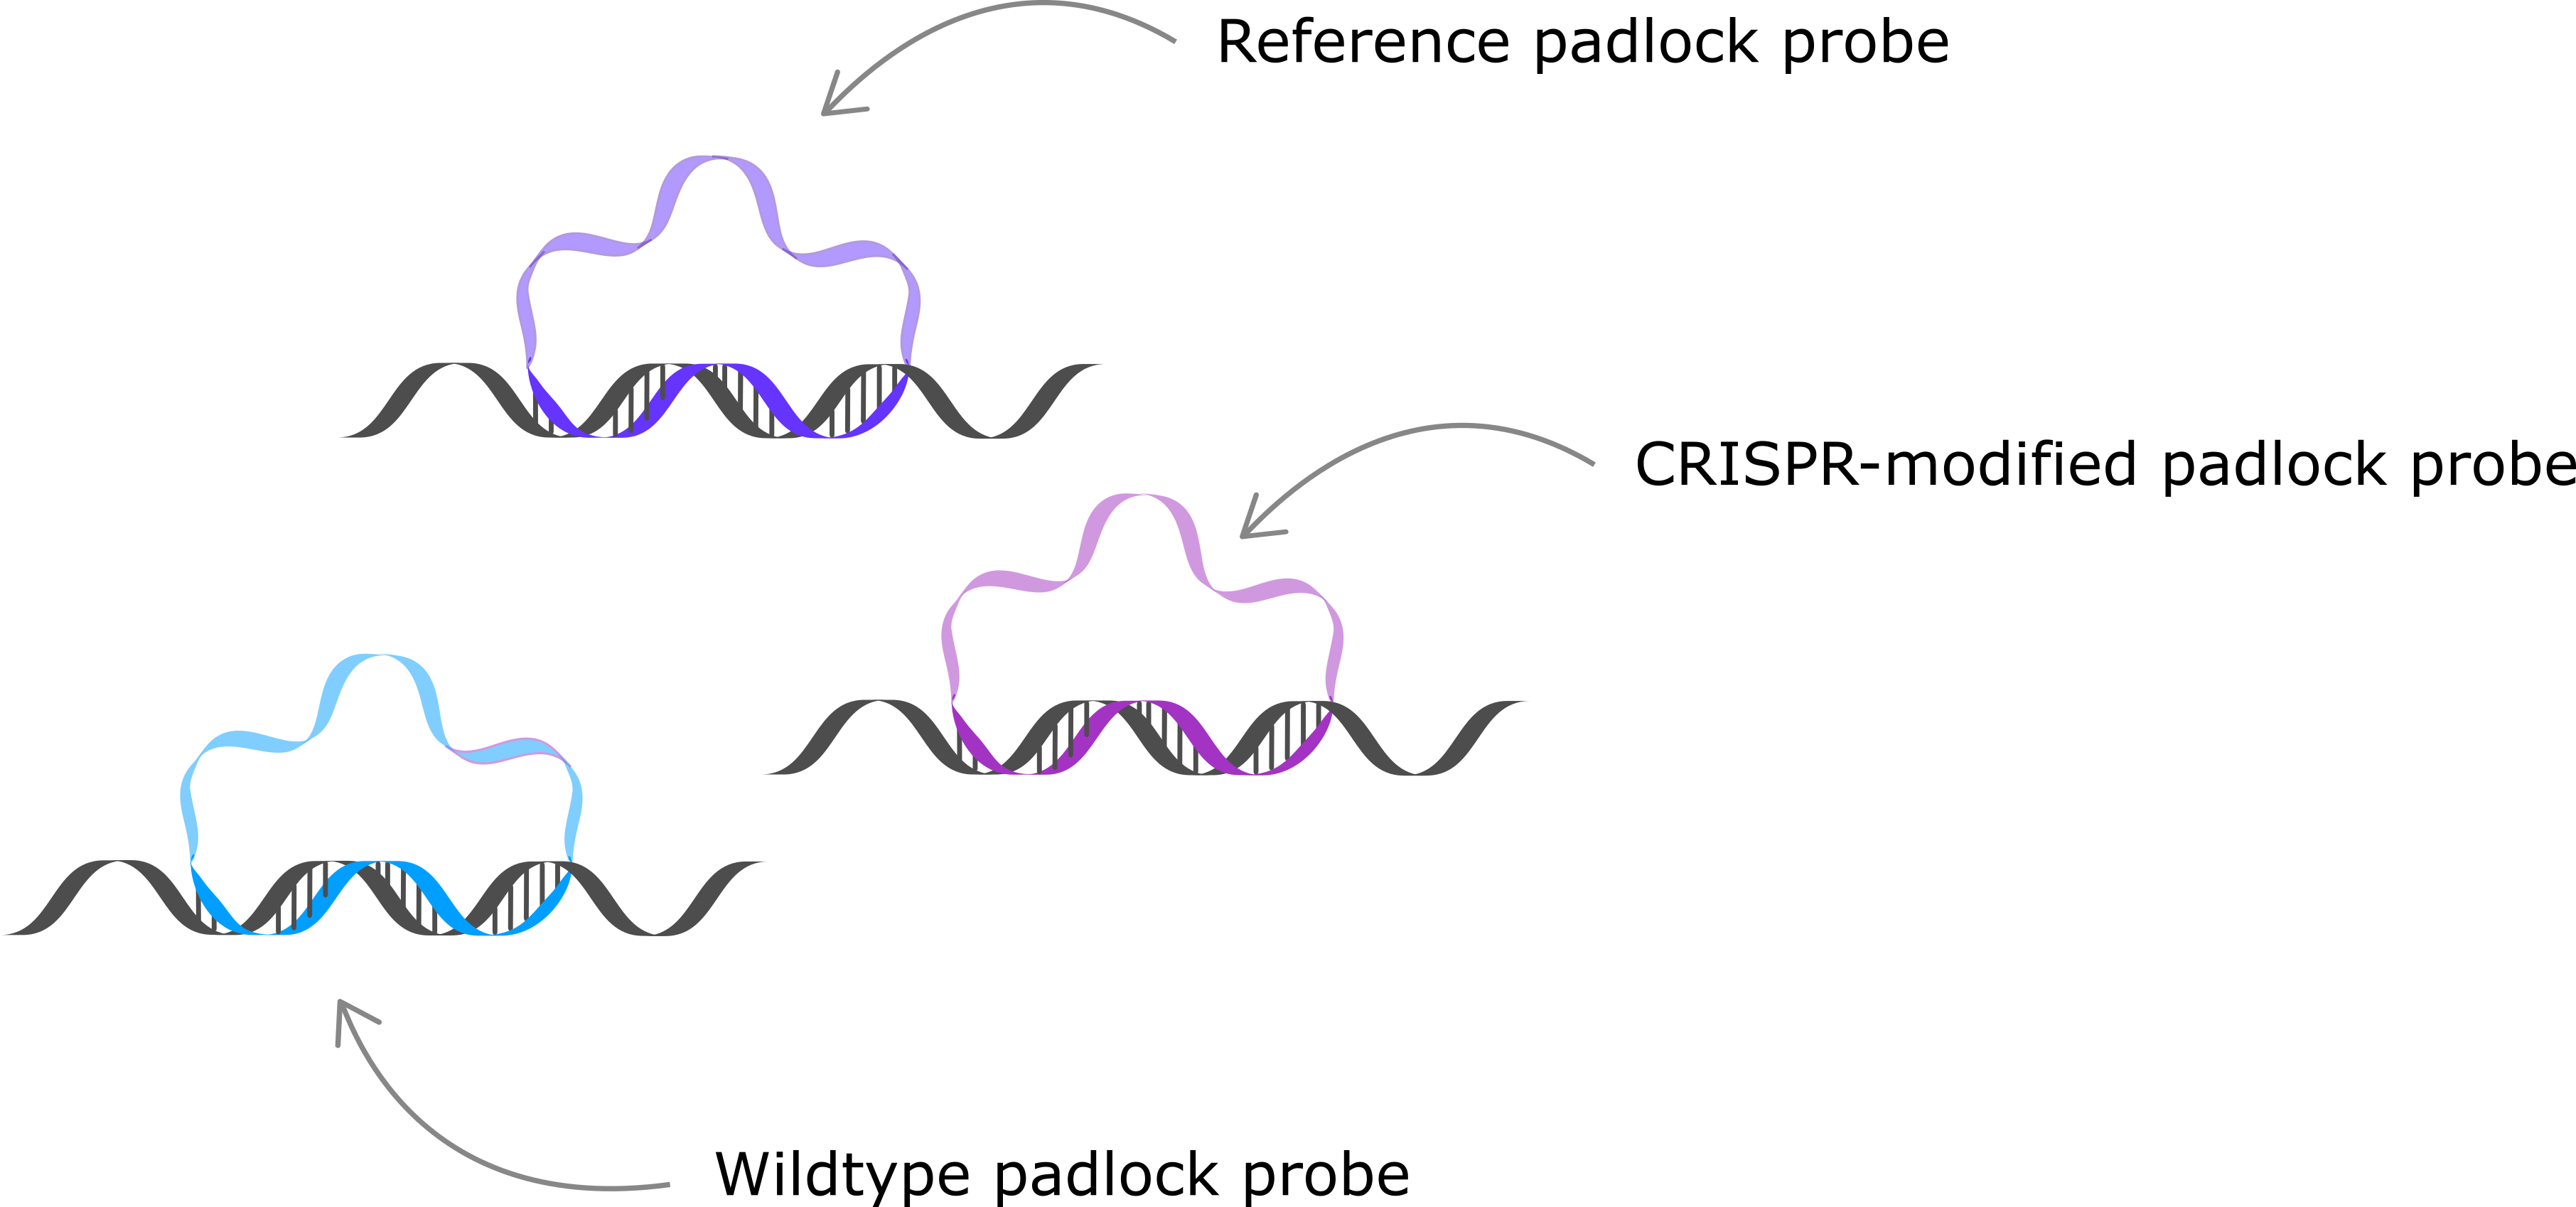 Cell Lysis & DNA Fragmentation, Step 2